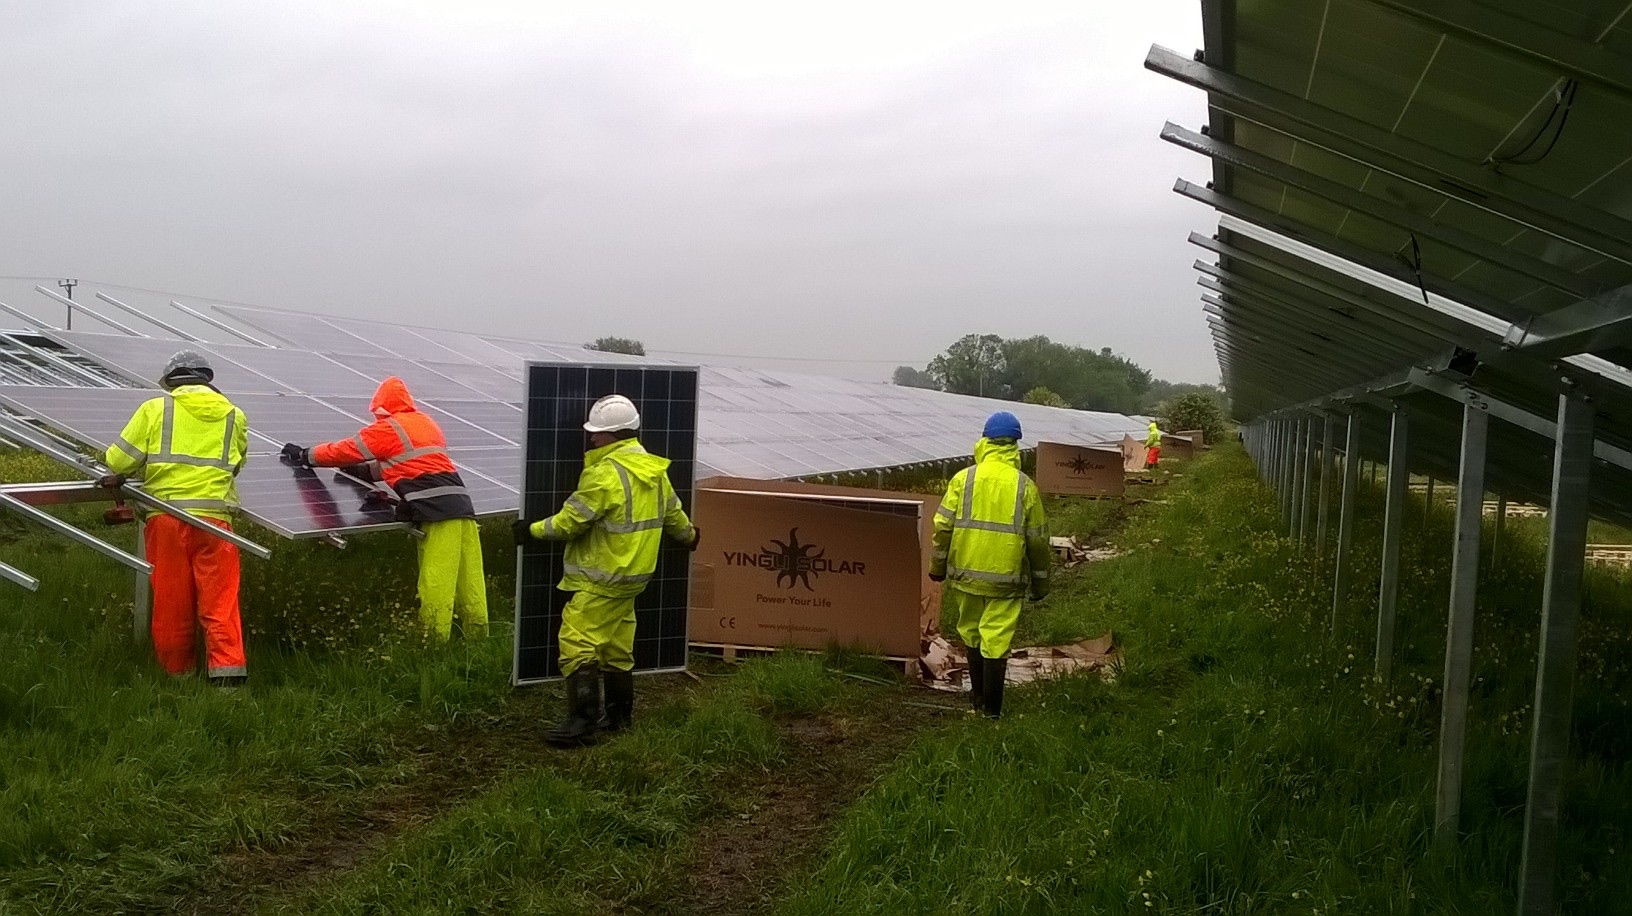 Swindon’s pioneering ‘solar bond’ scheme hits funding target a month early